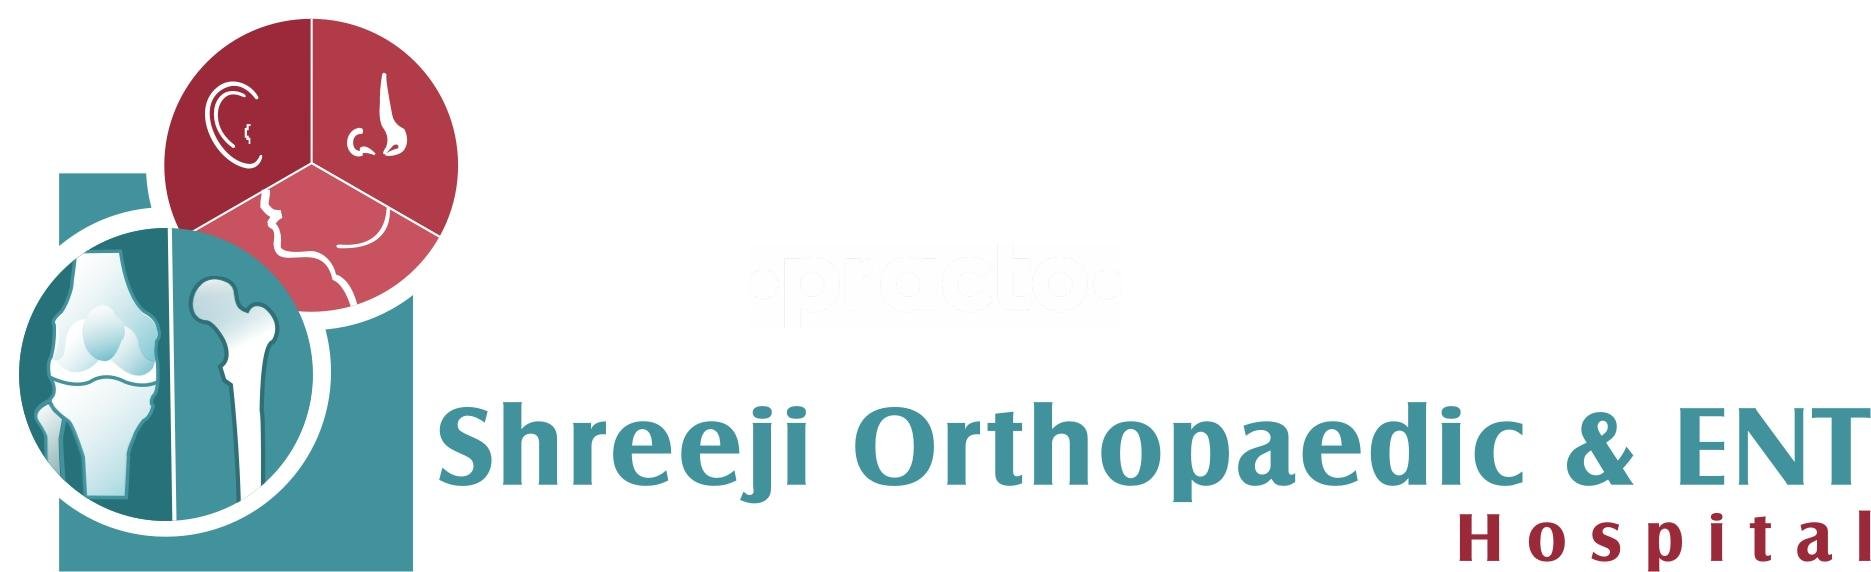 Shreeji Orthopaedic & Ent Hospital